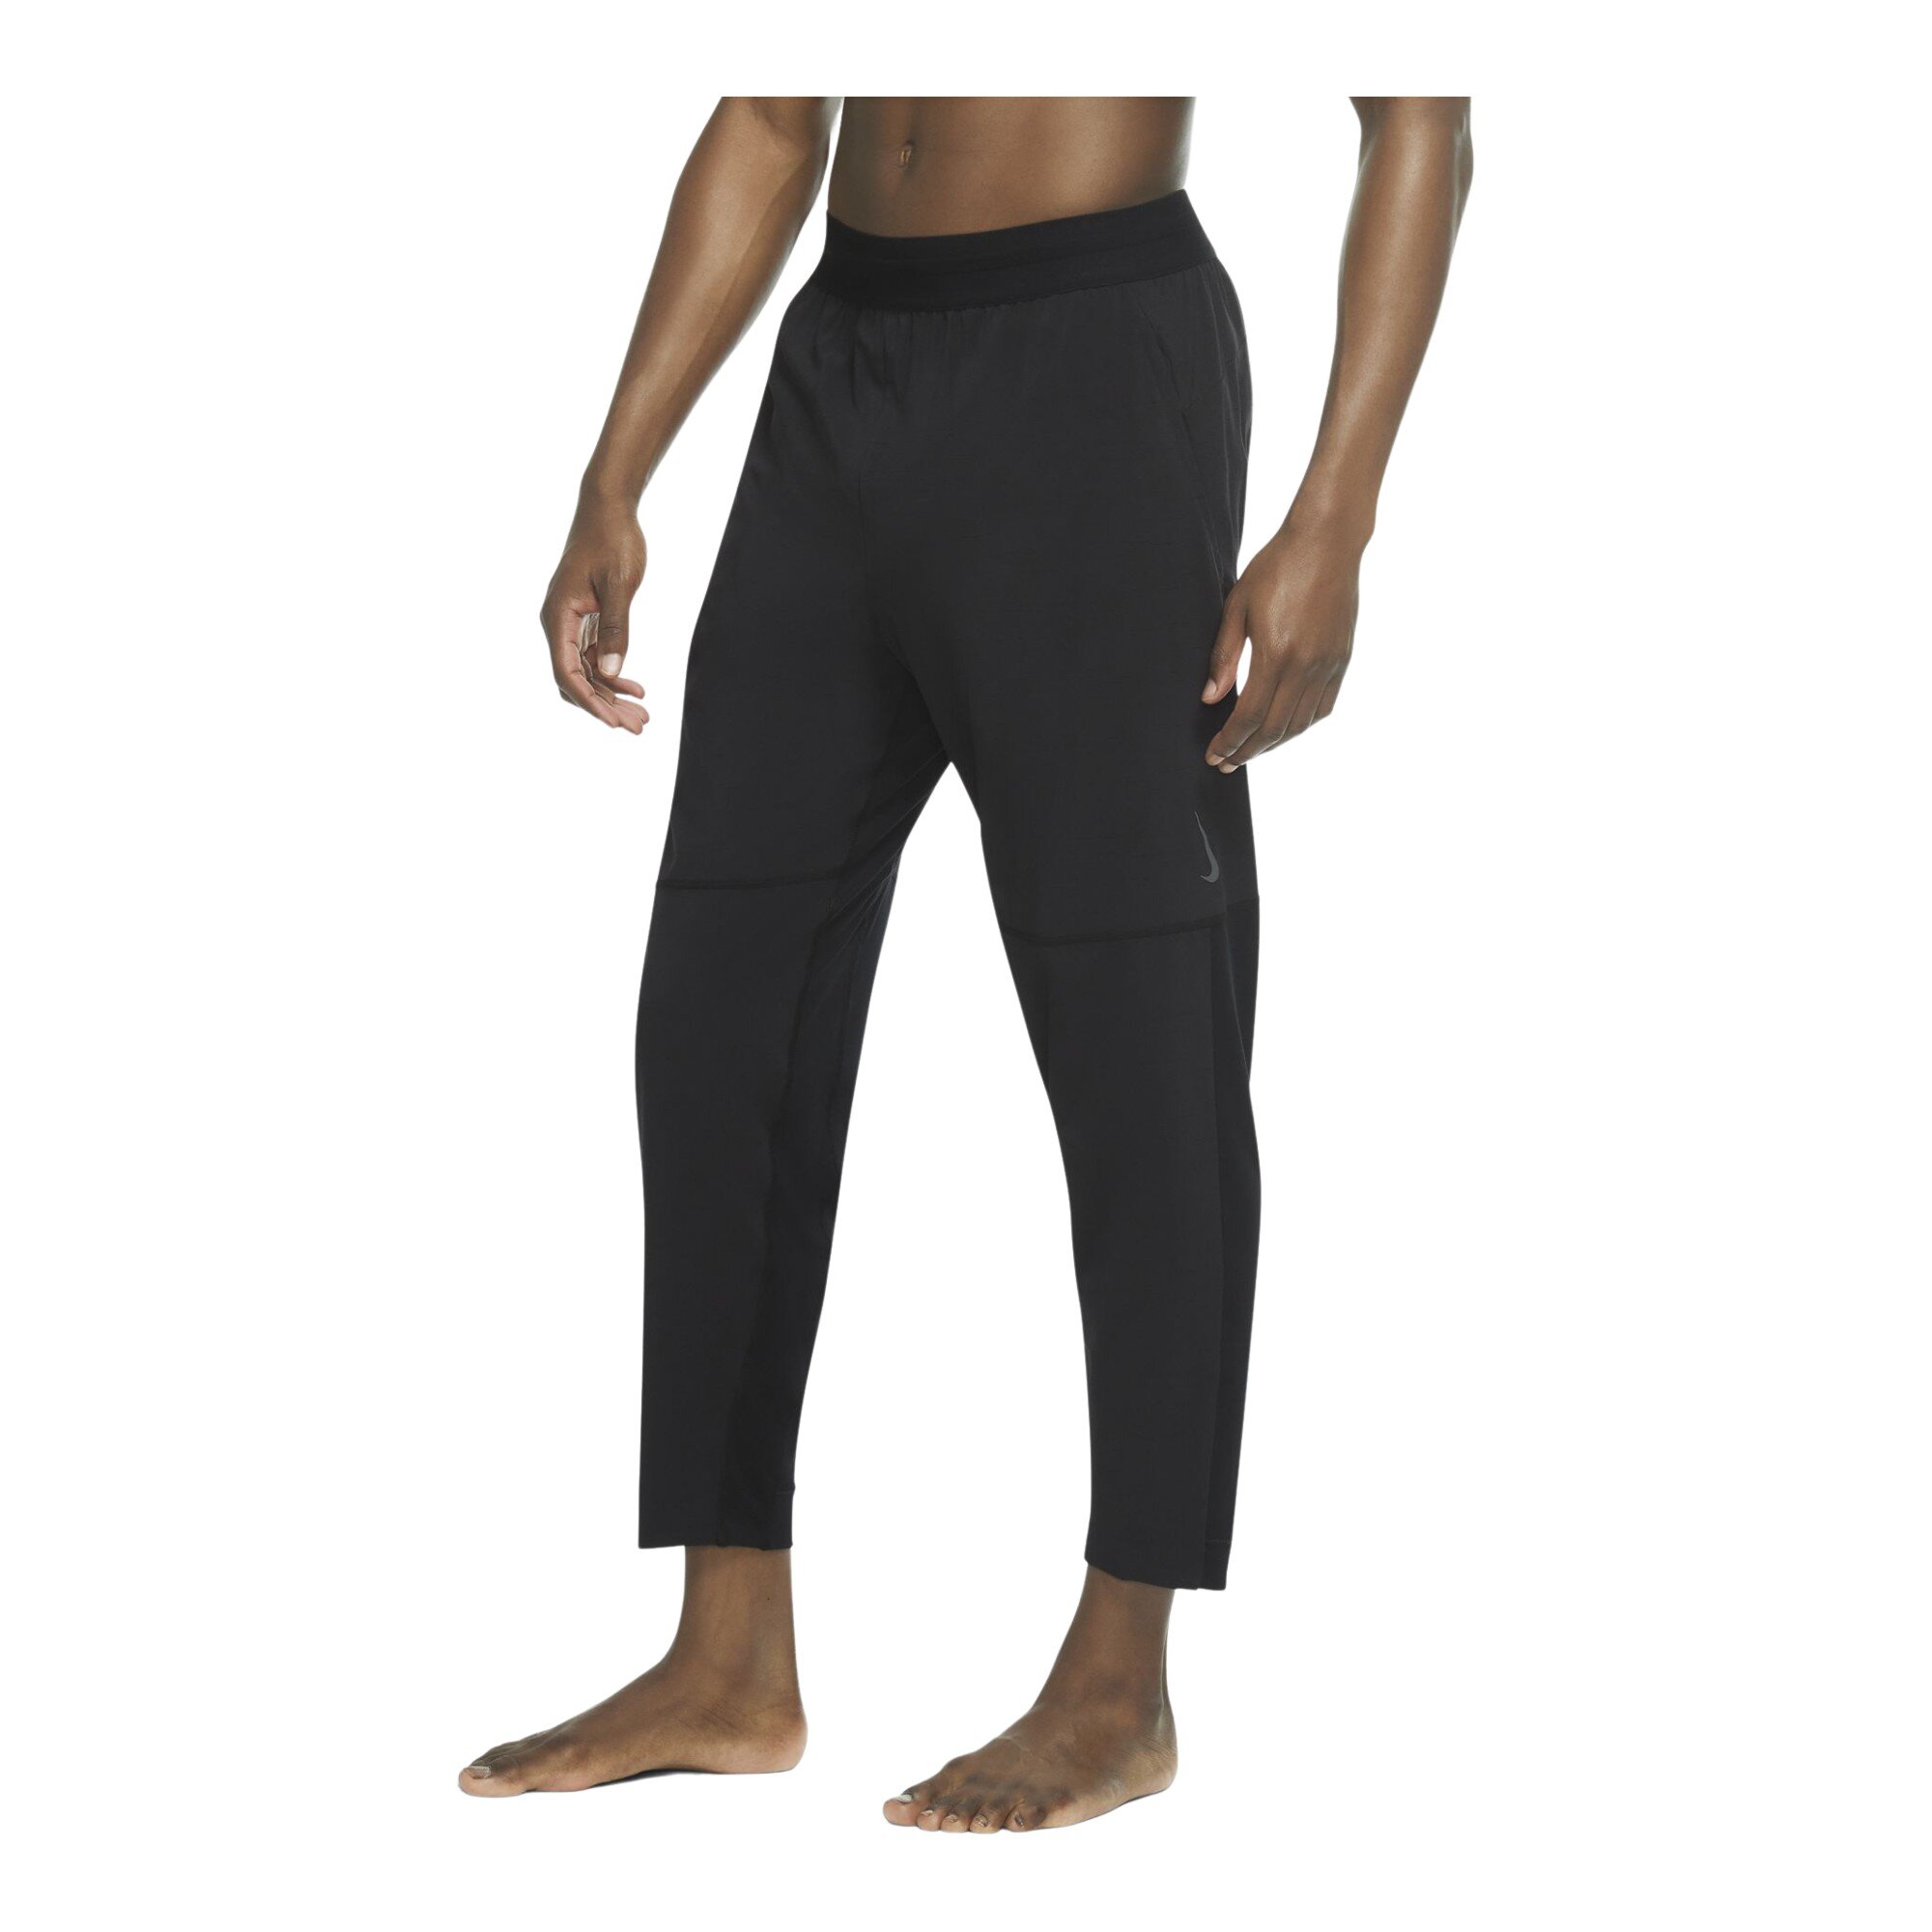 Nike Yoga Men's Pants,Style: CU7378